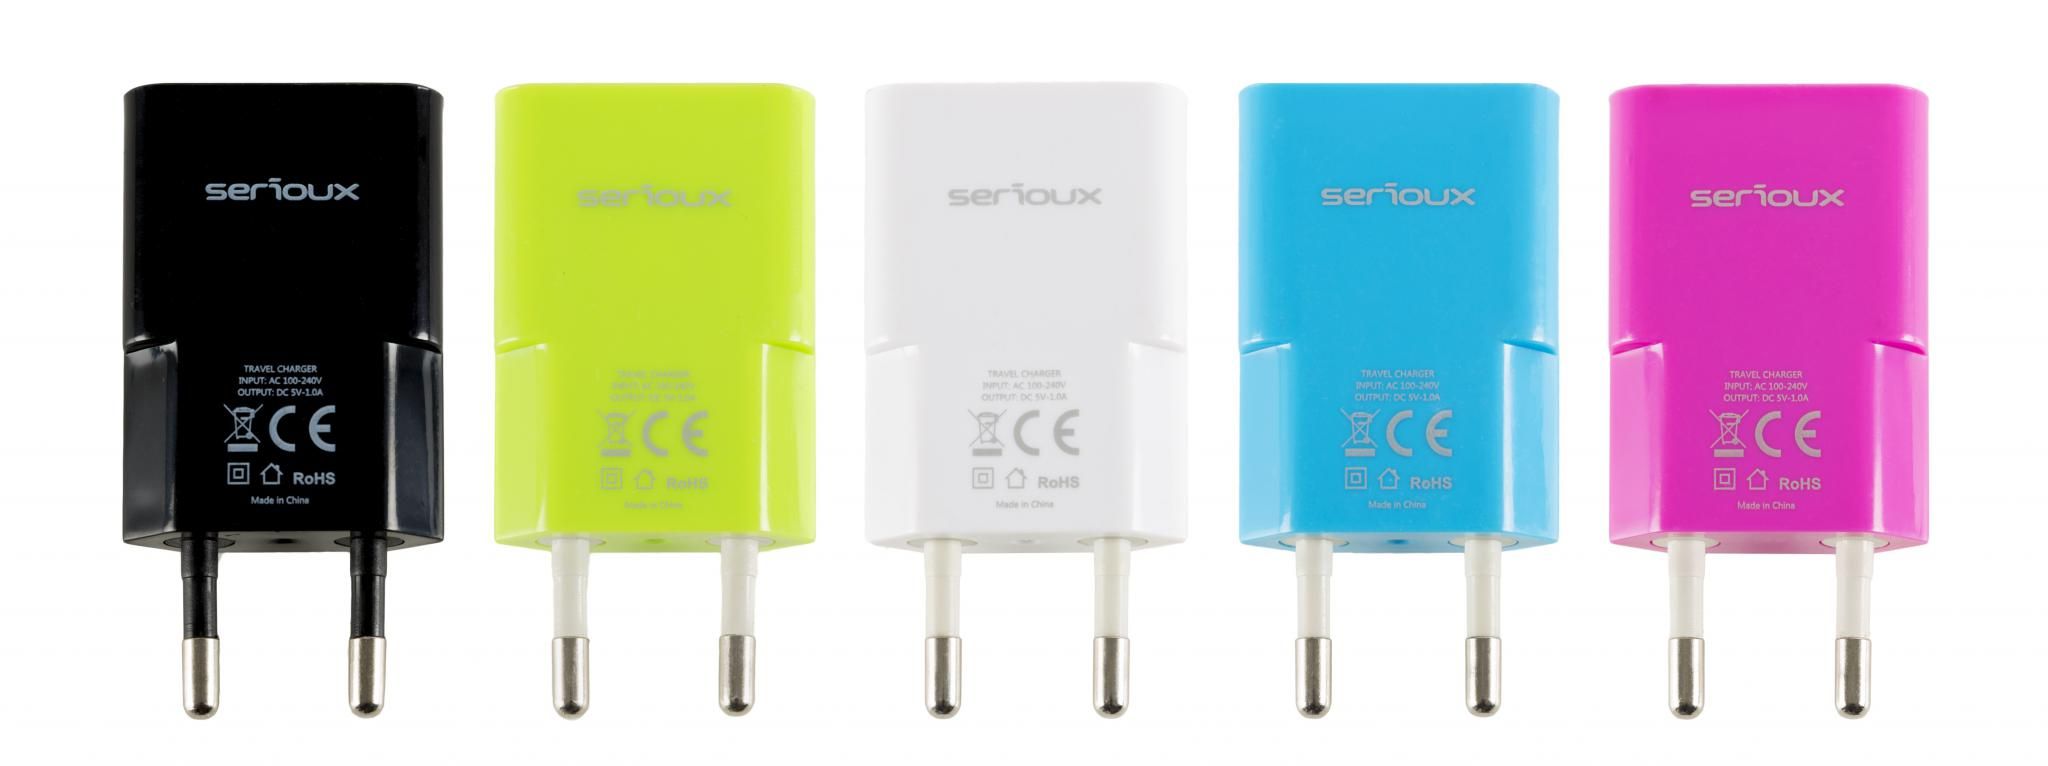 Incarcator Serioux AC, port USB 1A, diverse culori, bulk_1